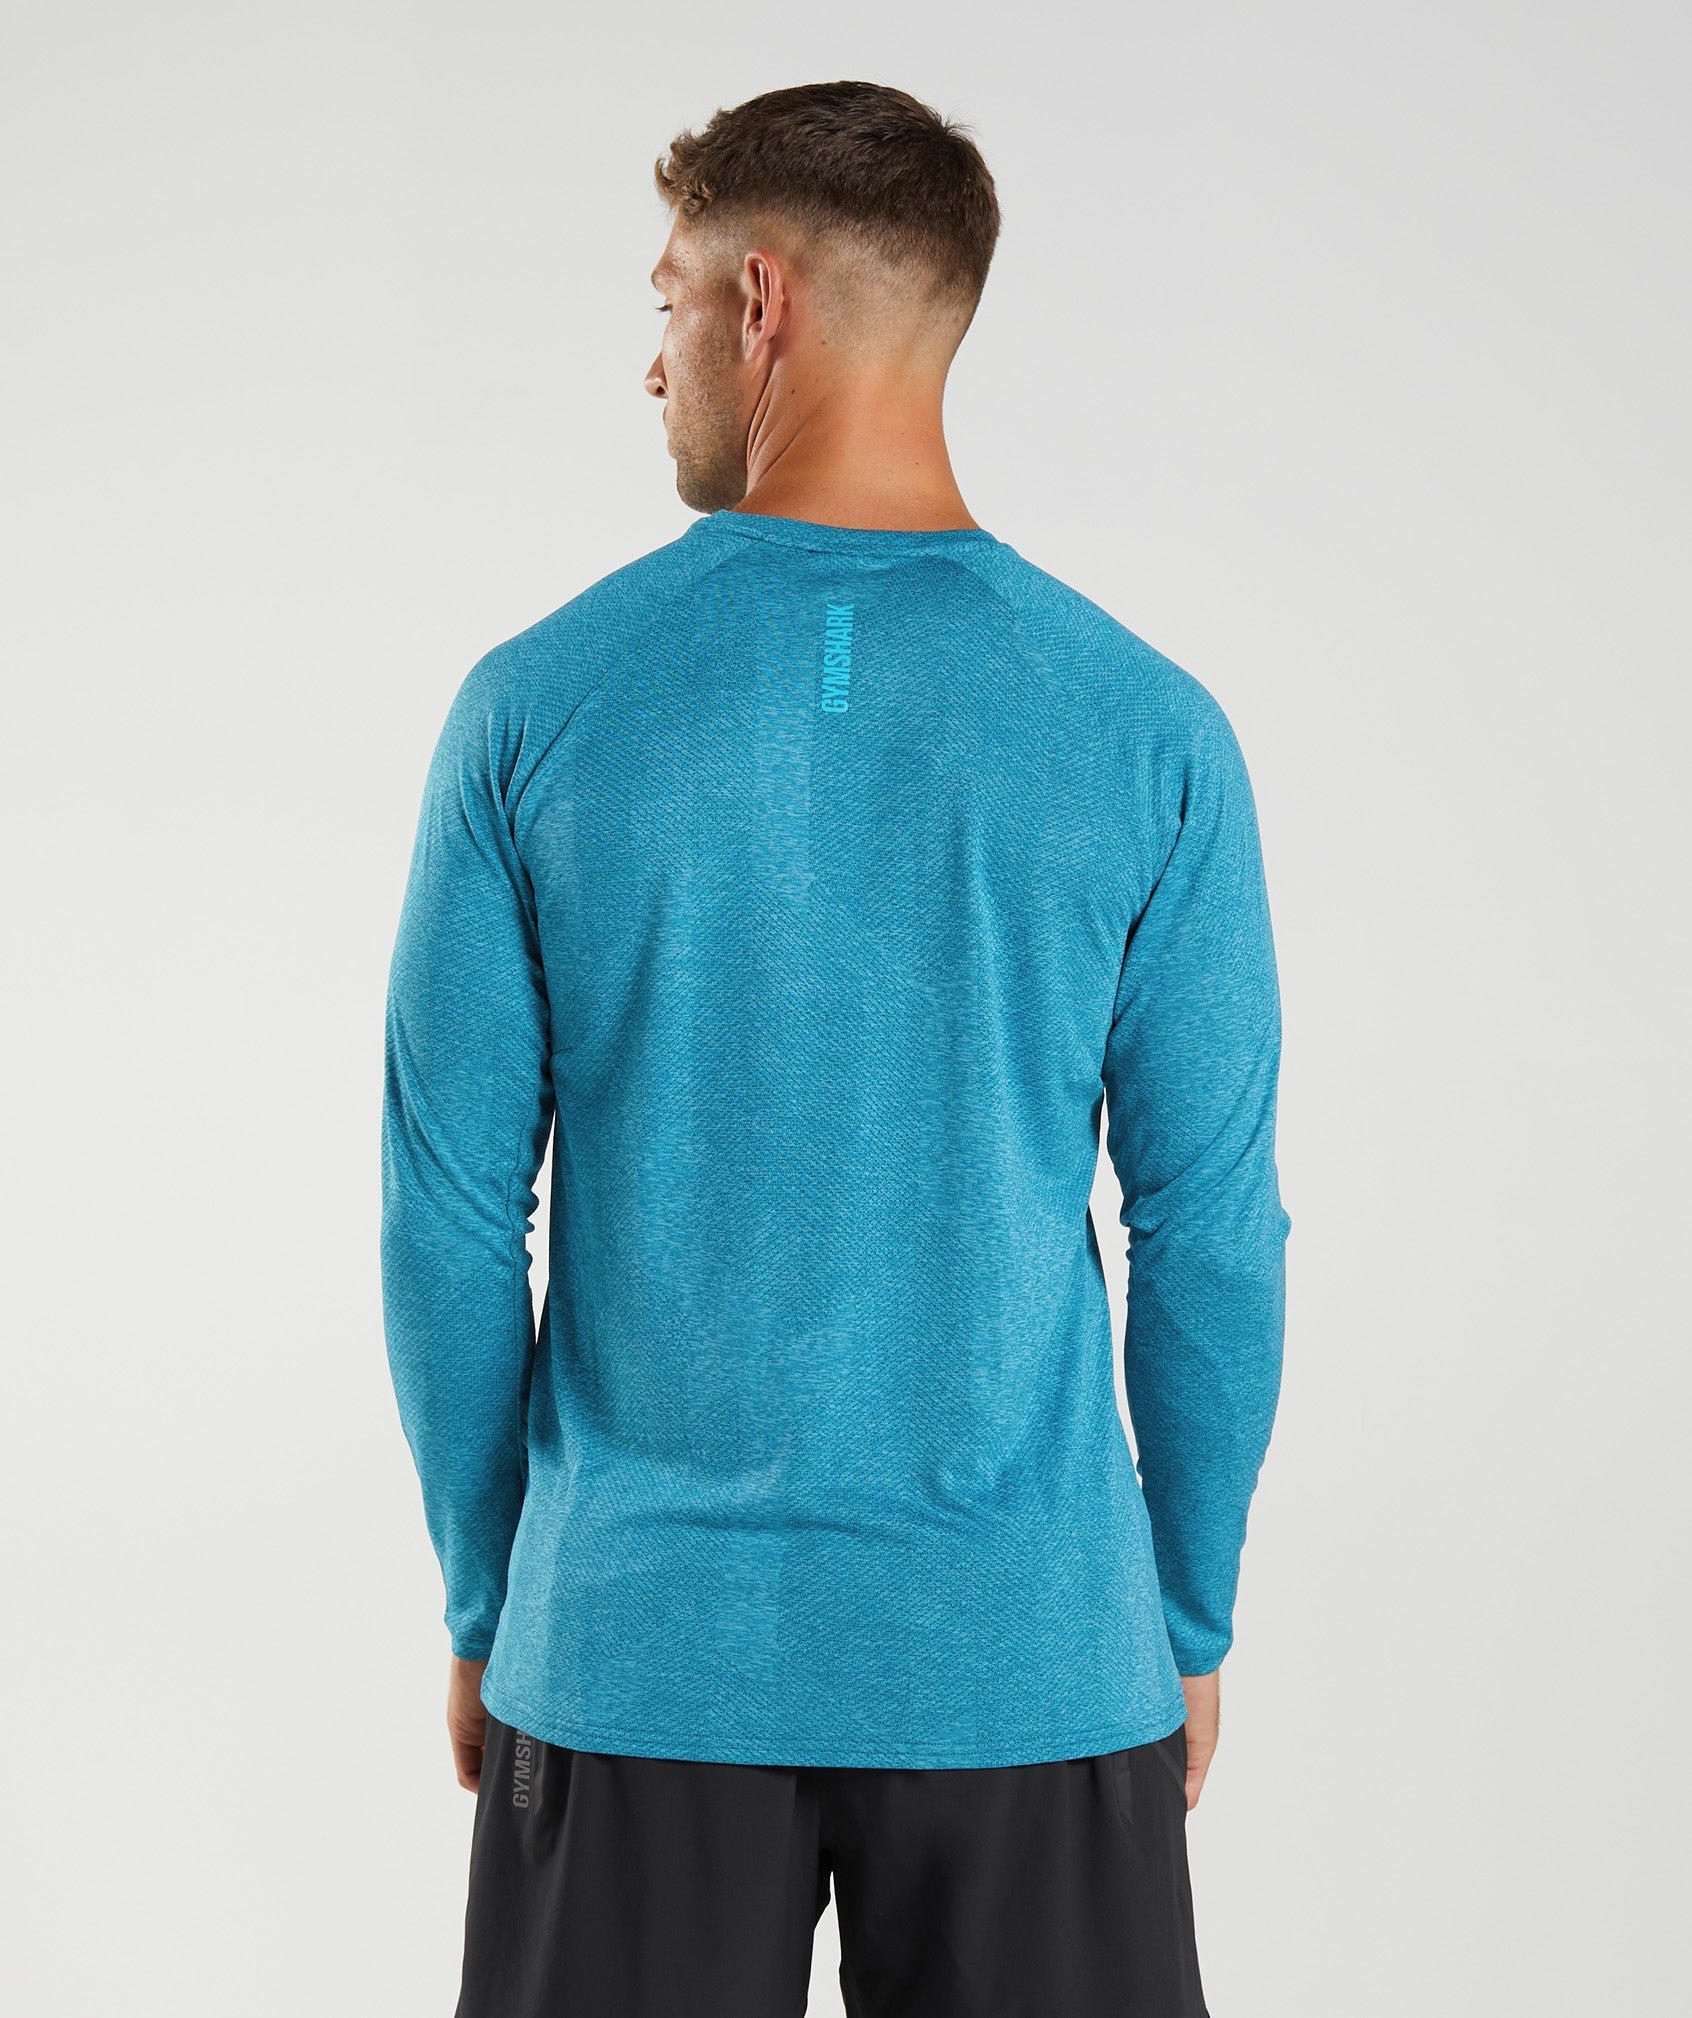 Apex Long Sleeve T-Shirt in Atlantic Blue/Shark Blue - view 2